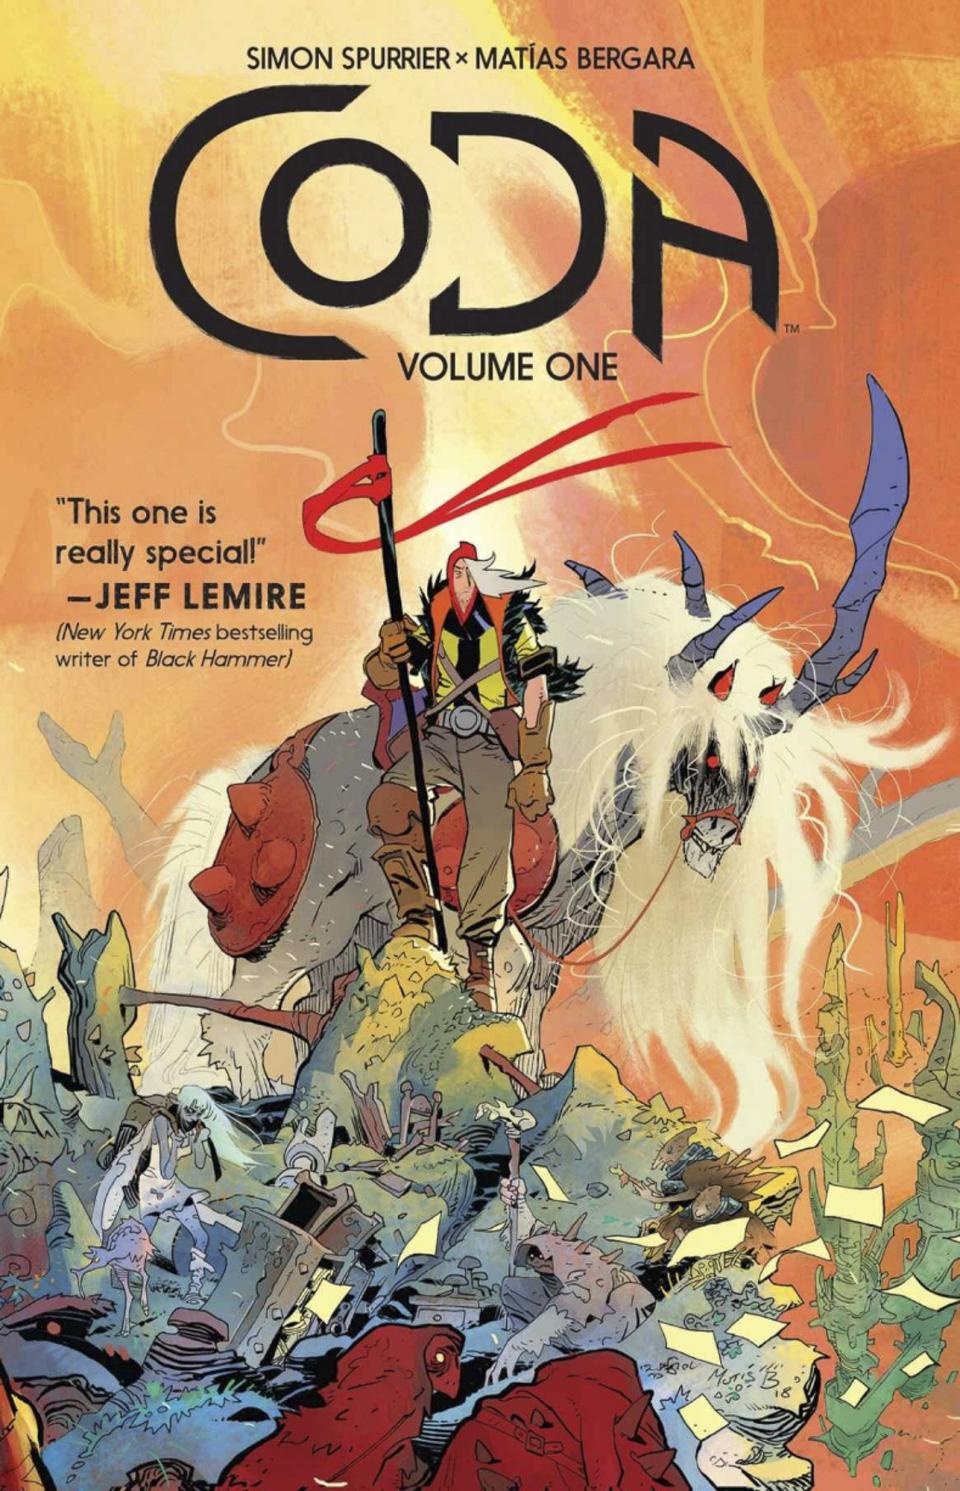 The cover of 'Coda' volume 1